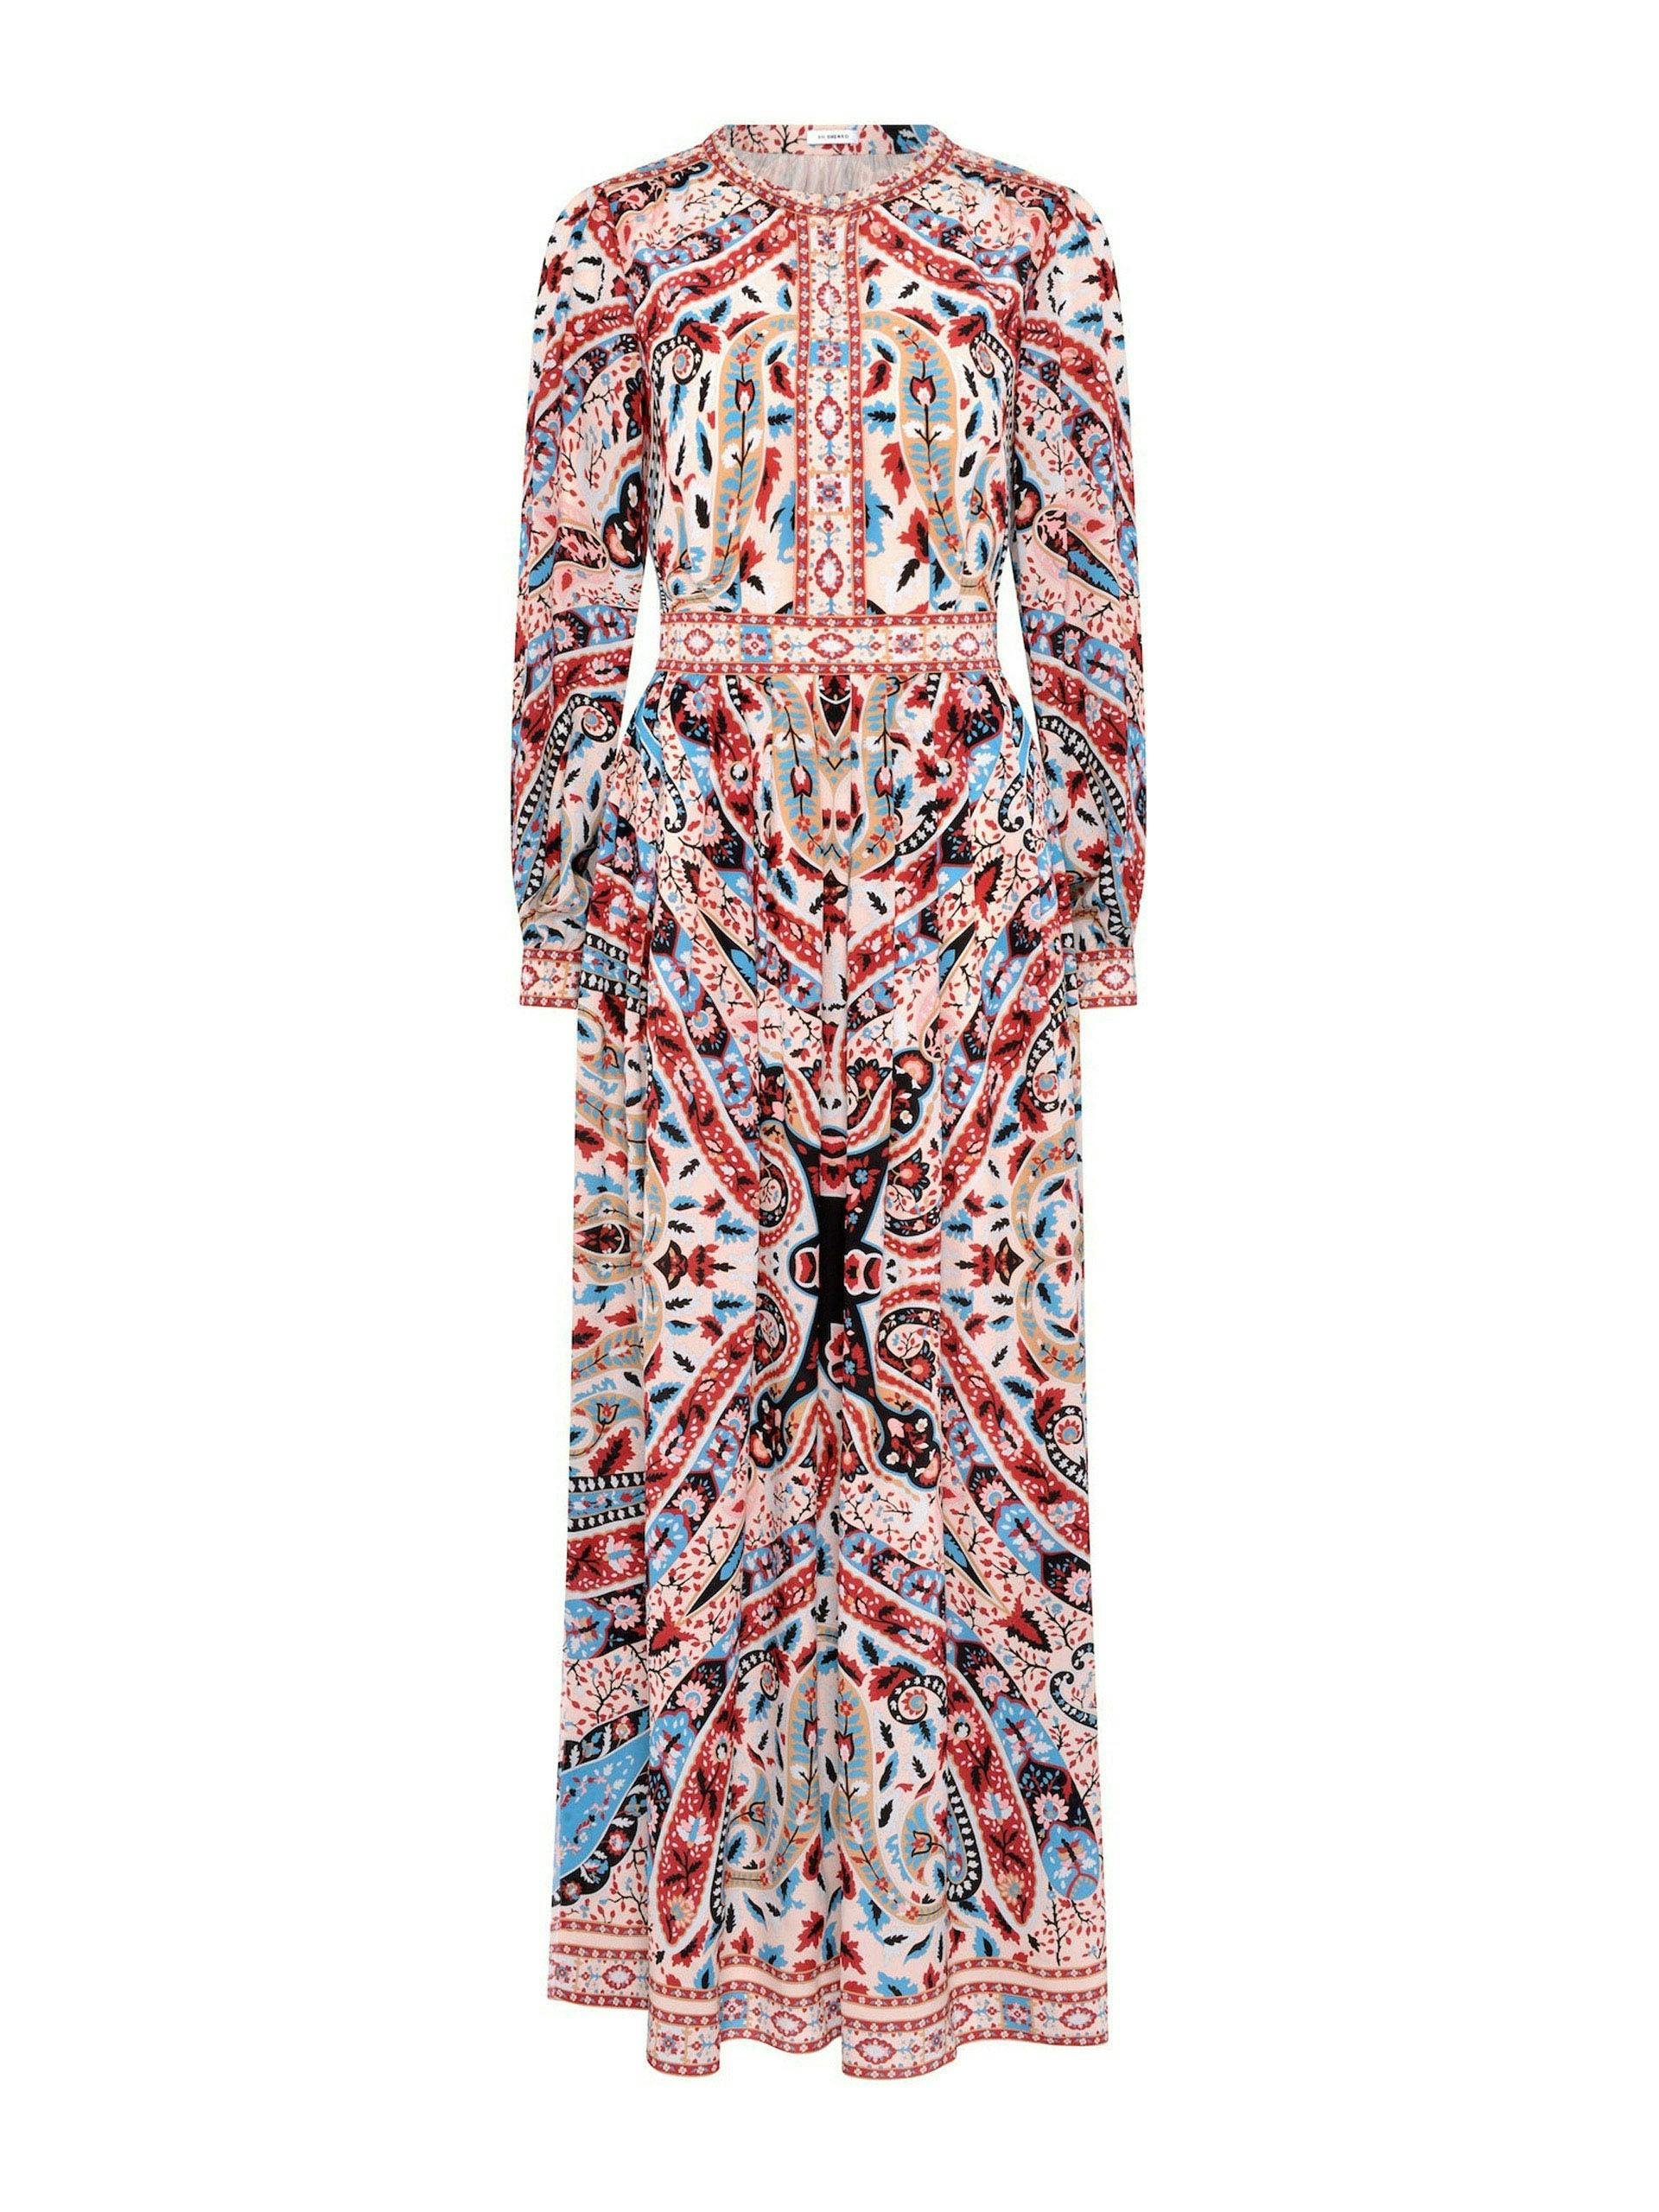 Alyona ornate paisley print dress